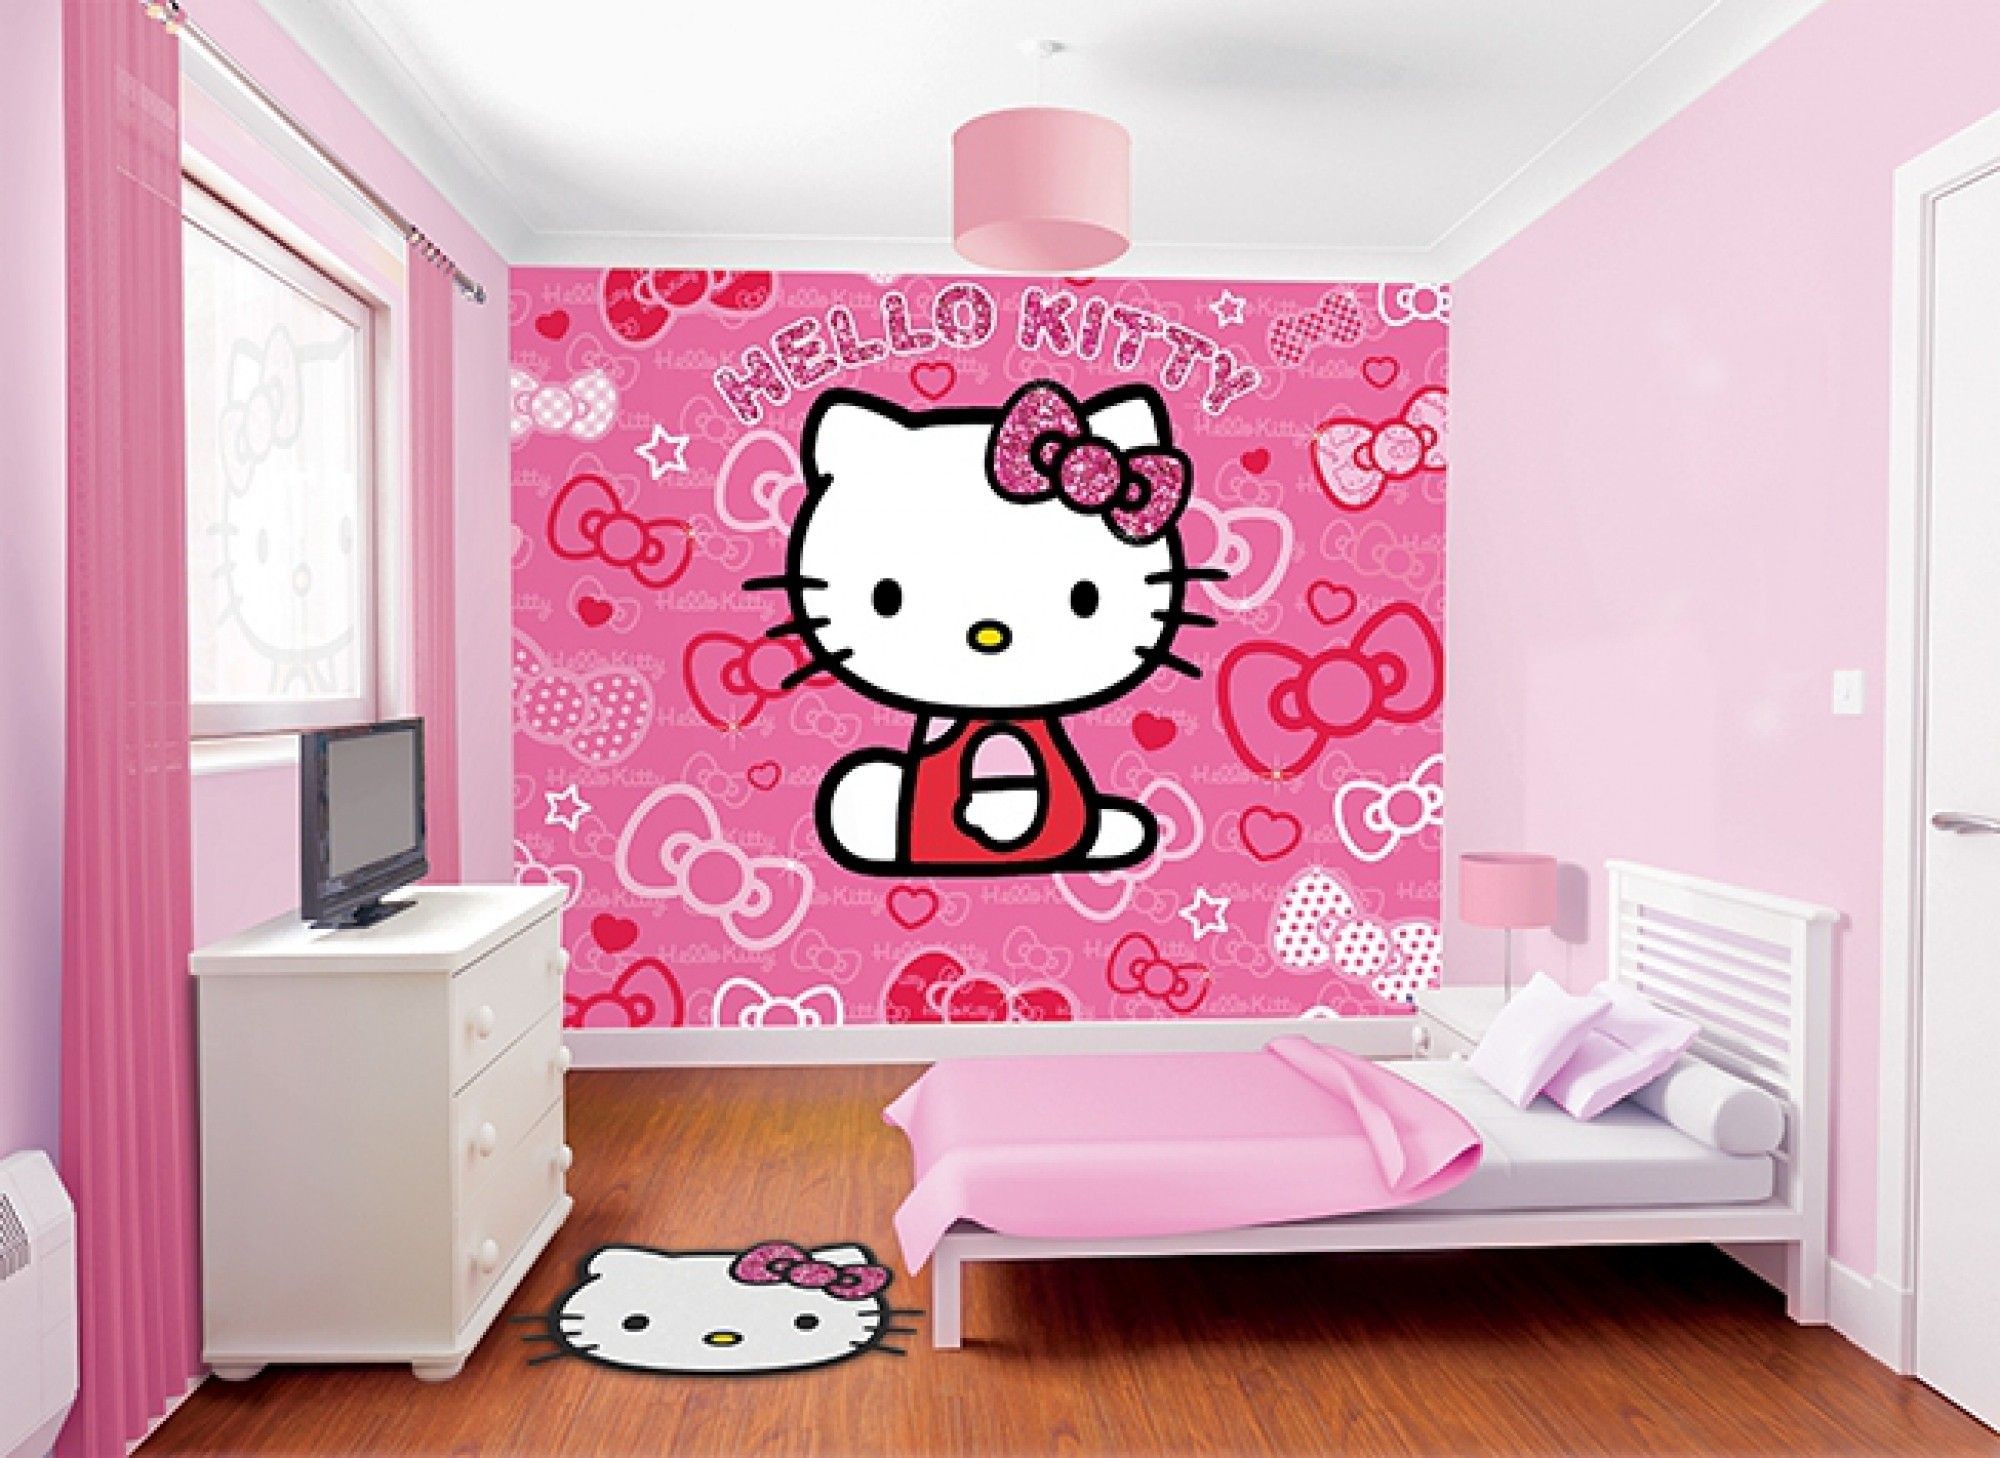 2000x1458 Modern Small Bedroom Inspiration For Children Girl Bedrooms Amusing Hello  Kitty Wallpaper Kids Girls In Decorating ...